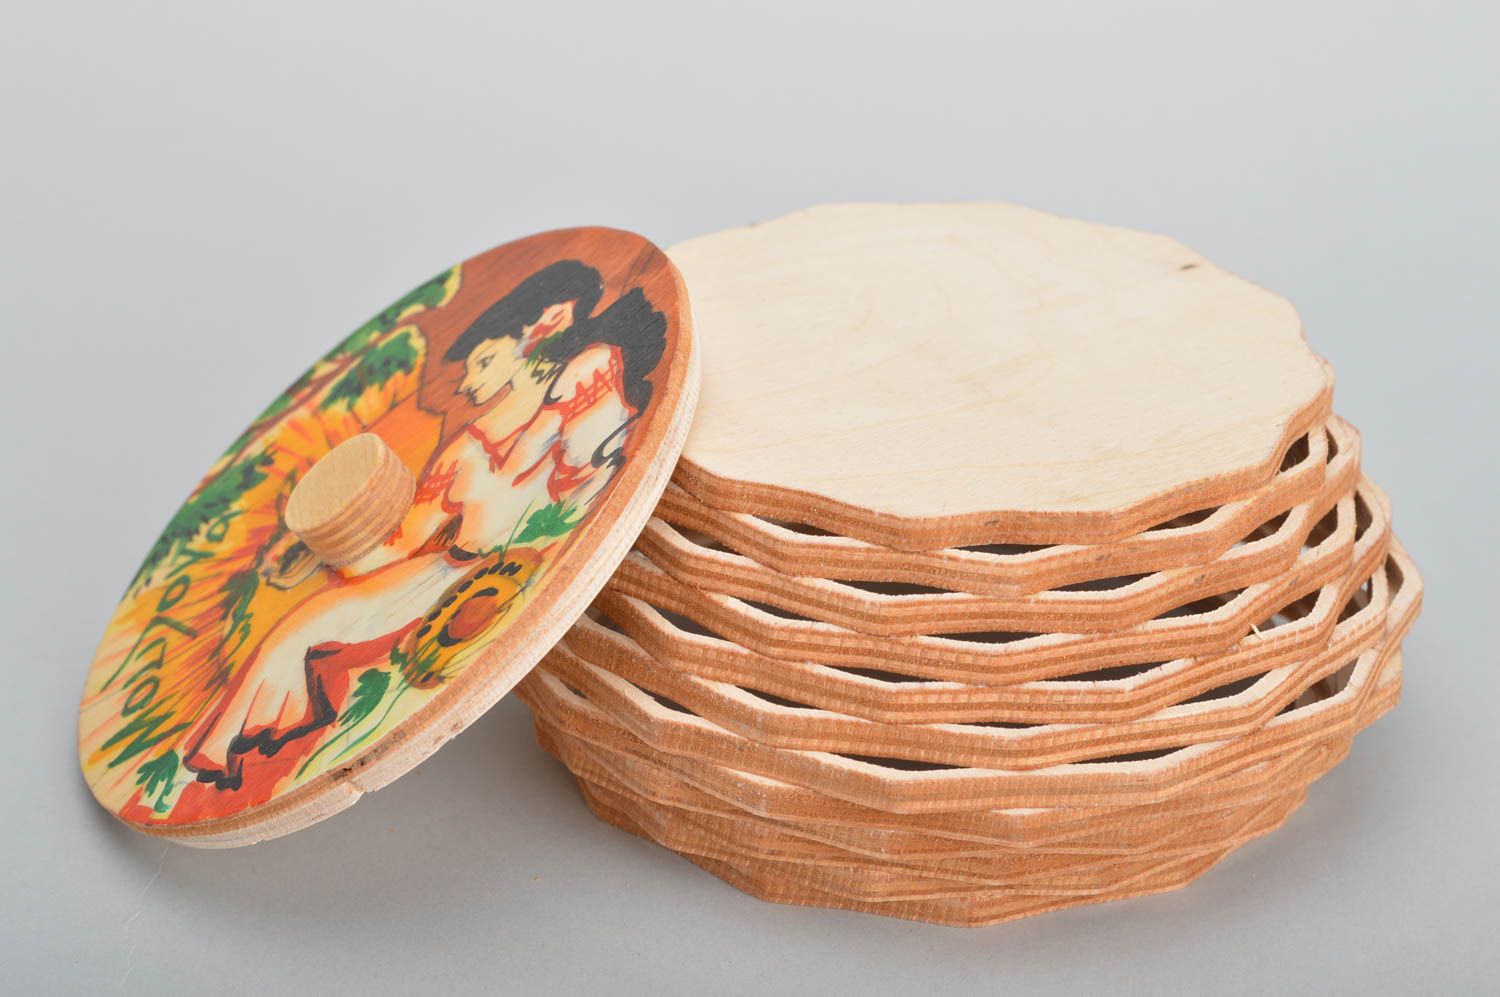 Runde Schatulle aus Holz bemalt ajour auffallend schön modisch handmade stilvoll foto 5